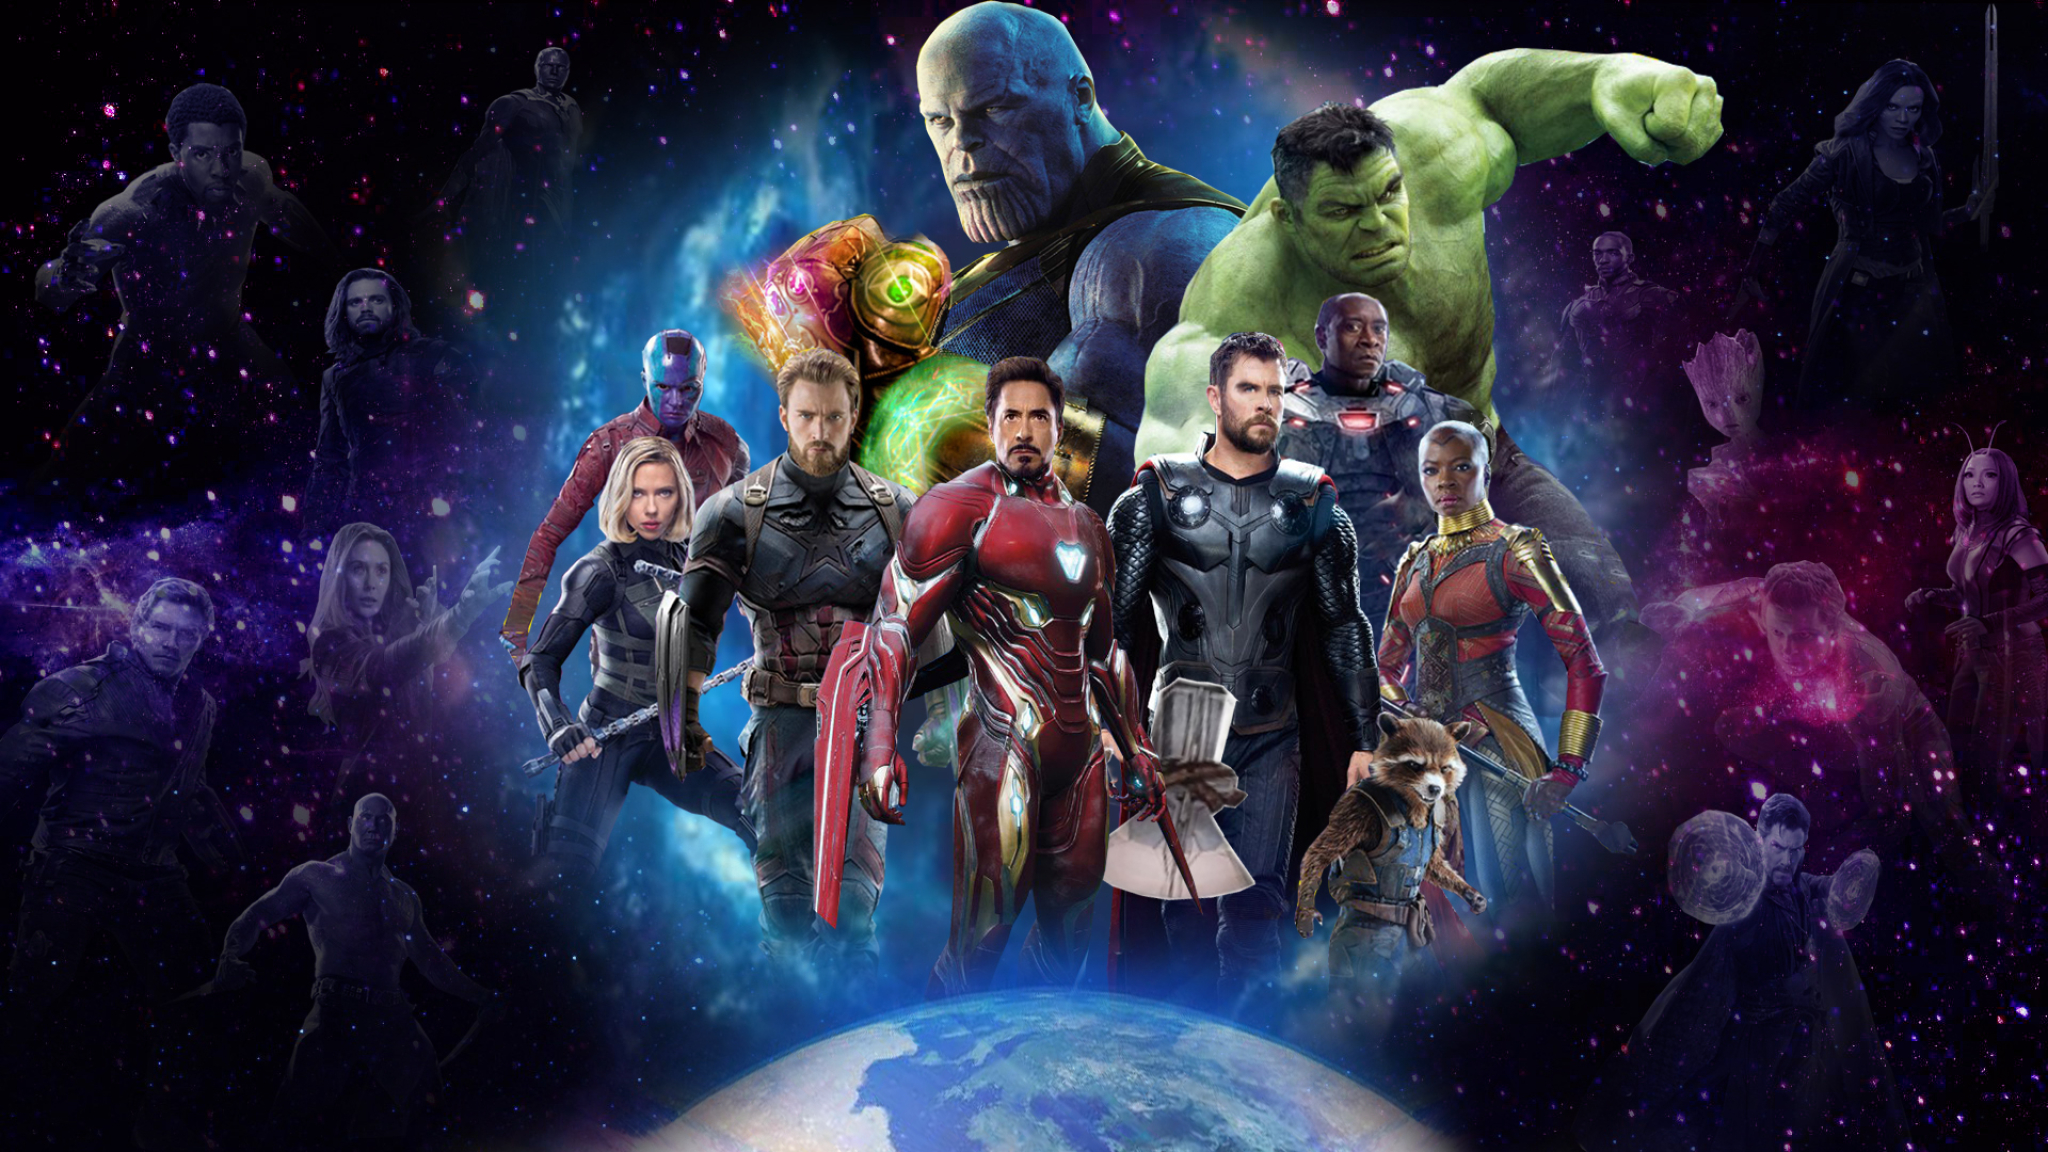 Avengers 4 Artwork From Infinity War, Full HD Wallpaper